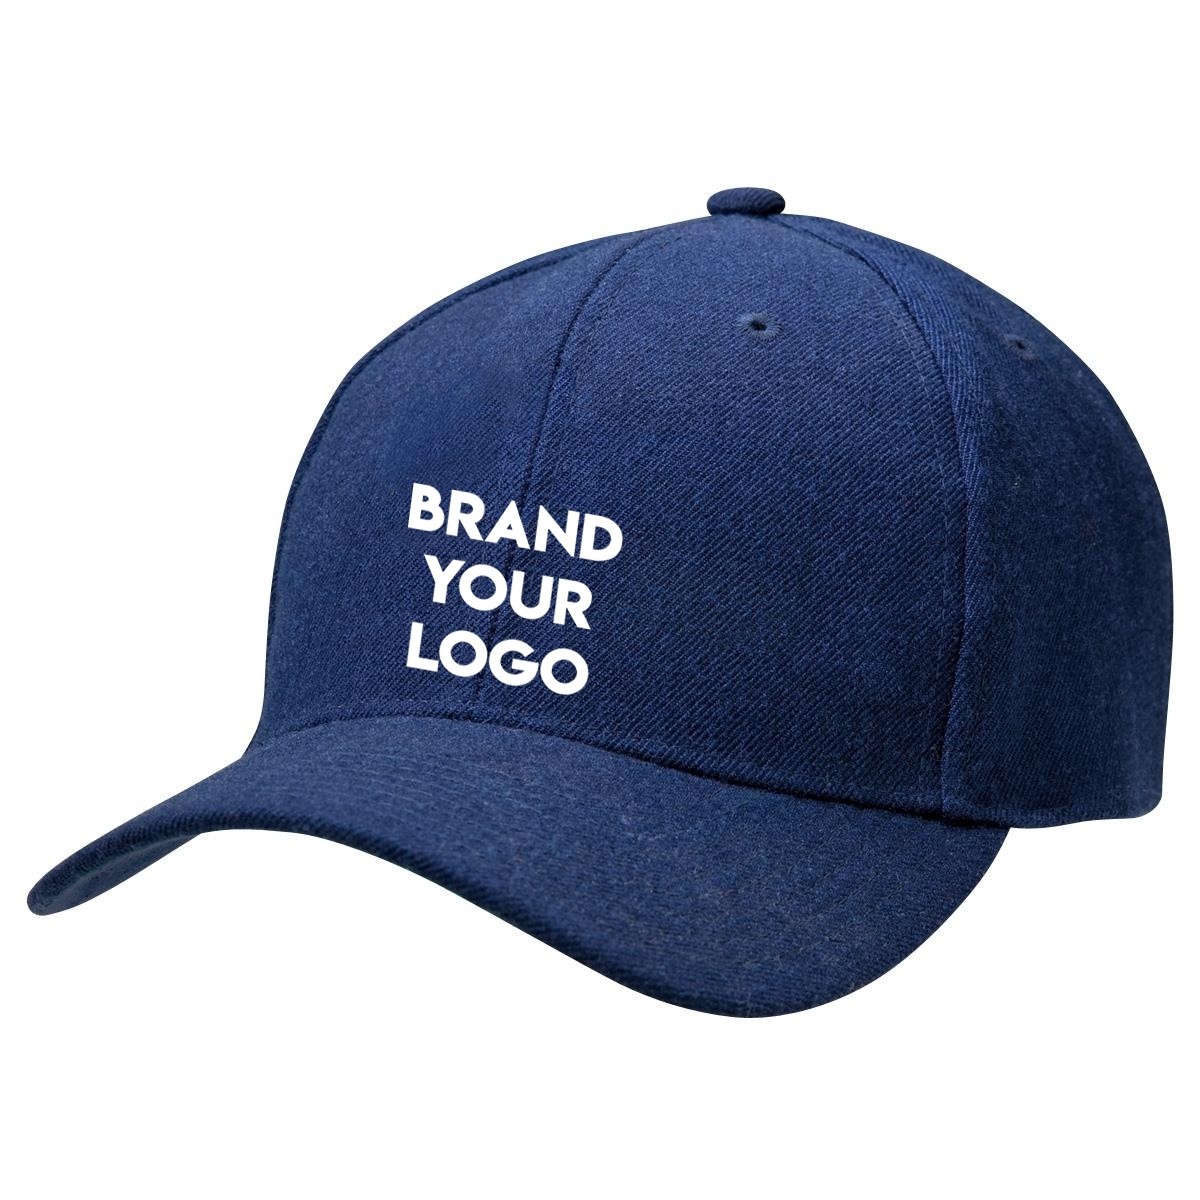 Acrylic Caps personalised, promotional caps in Australia